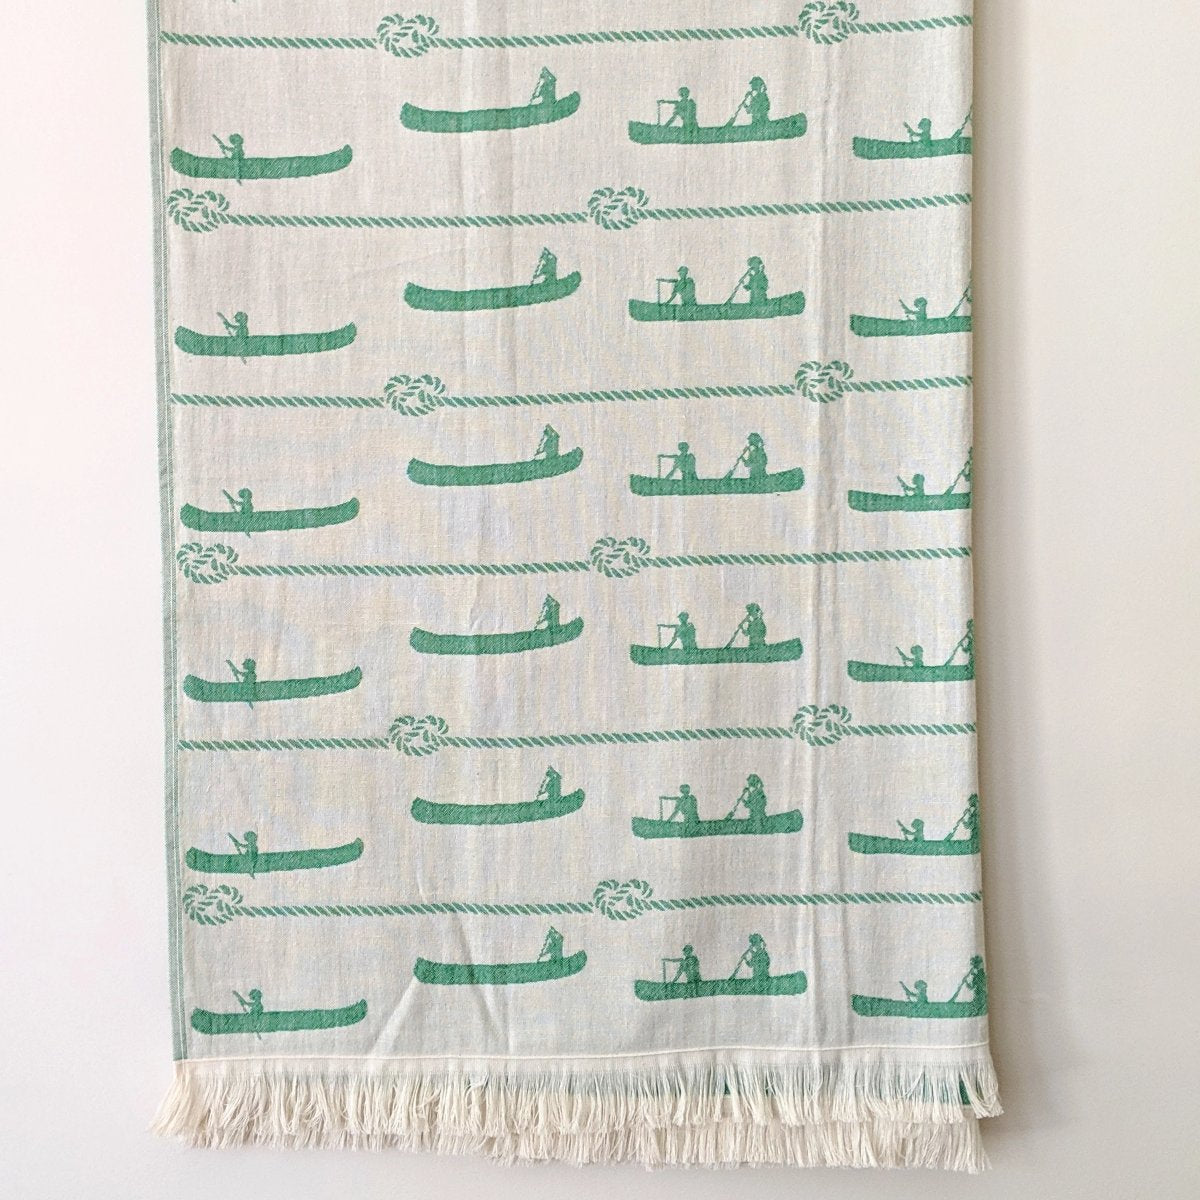 Canoe Design Turkish Towel, Green, use in Hiking, Camping, Canoeing, Toronto Canada 